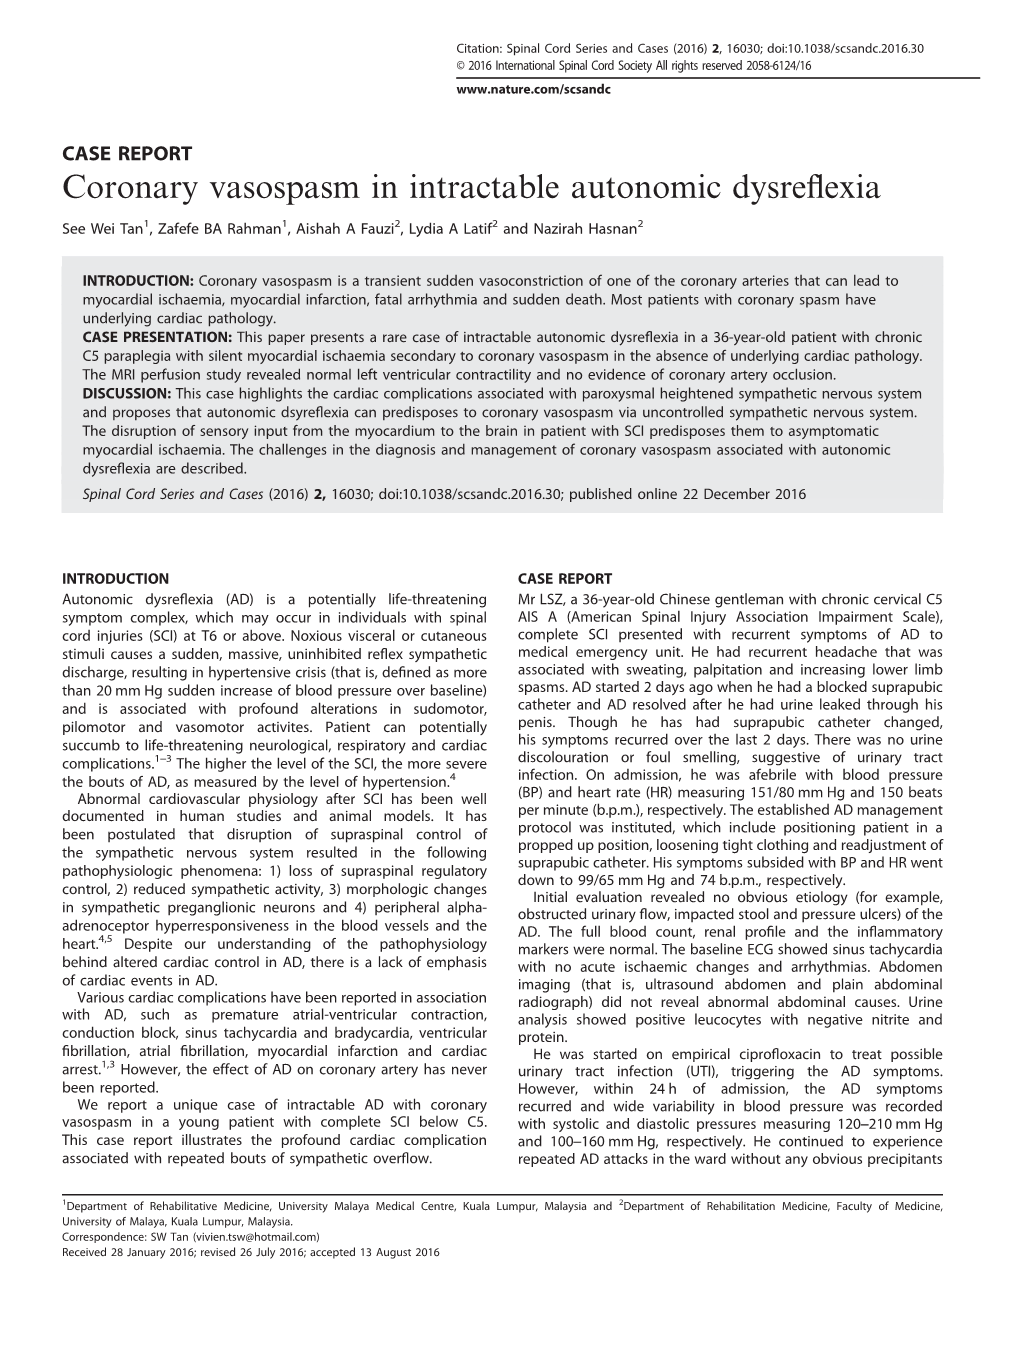 Coronary Vasospasm in Intractable Autonomic Dysreflexia